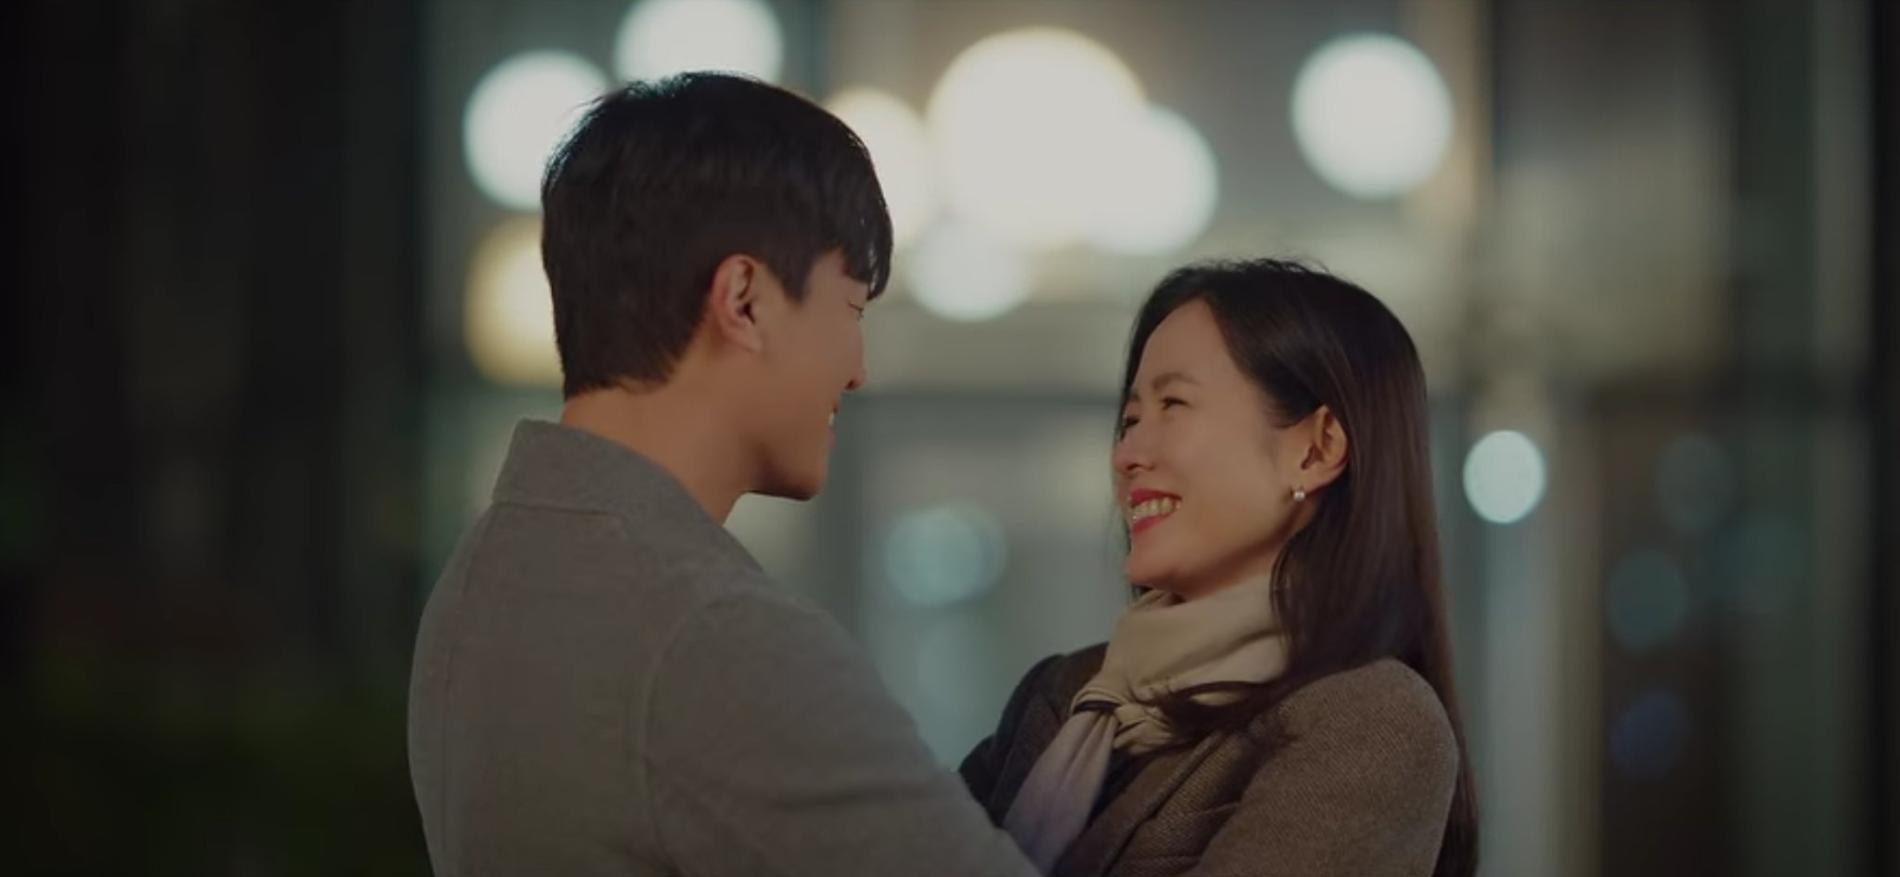 Tambah Seru dan Haru, Nonton Drama Korea “Thirty Nine” Episode 9